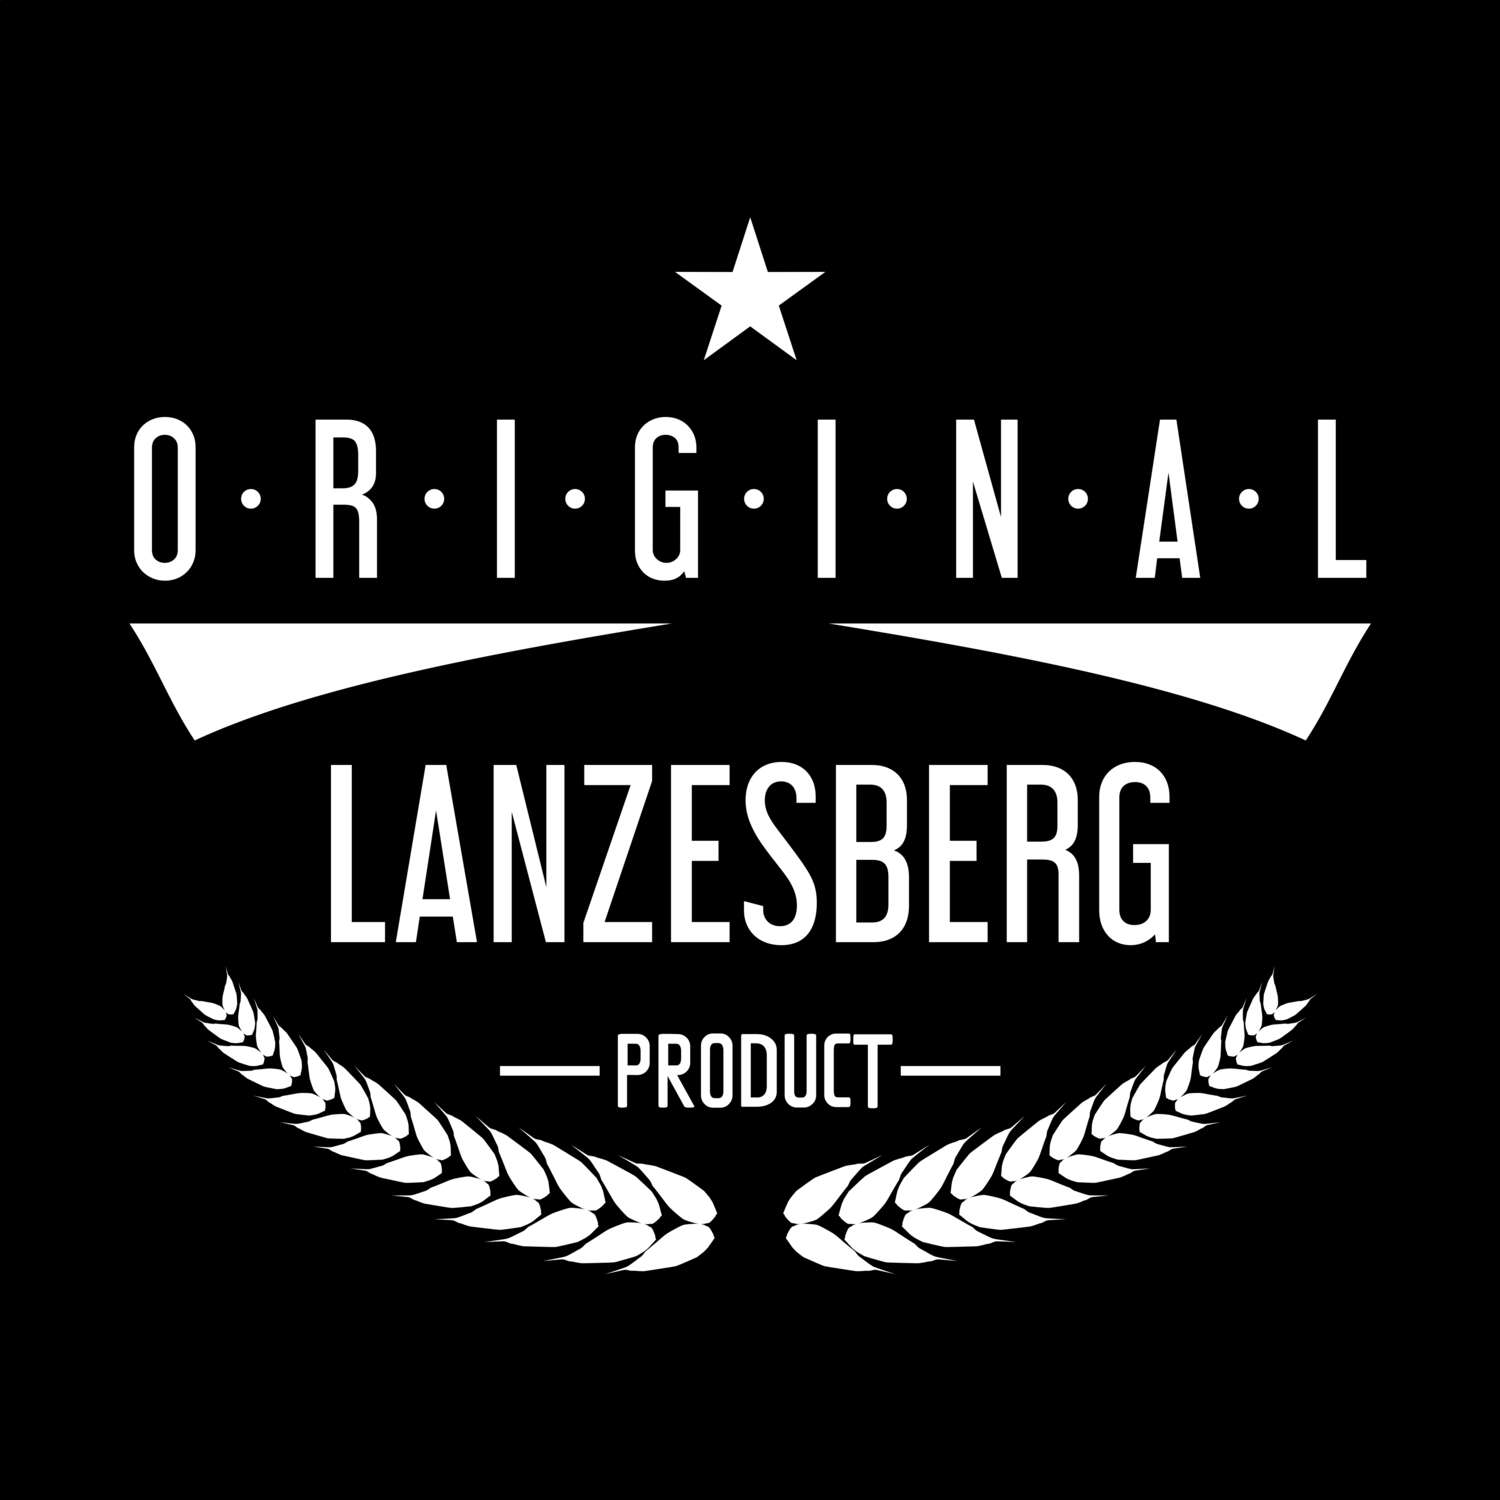 Lanzesberg T-Shirt »Original Product«